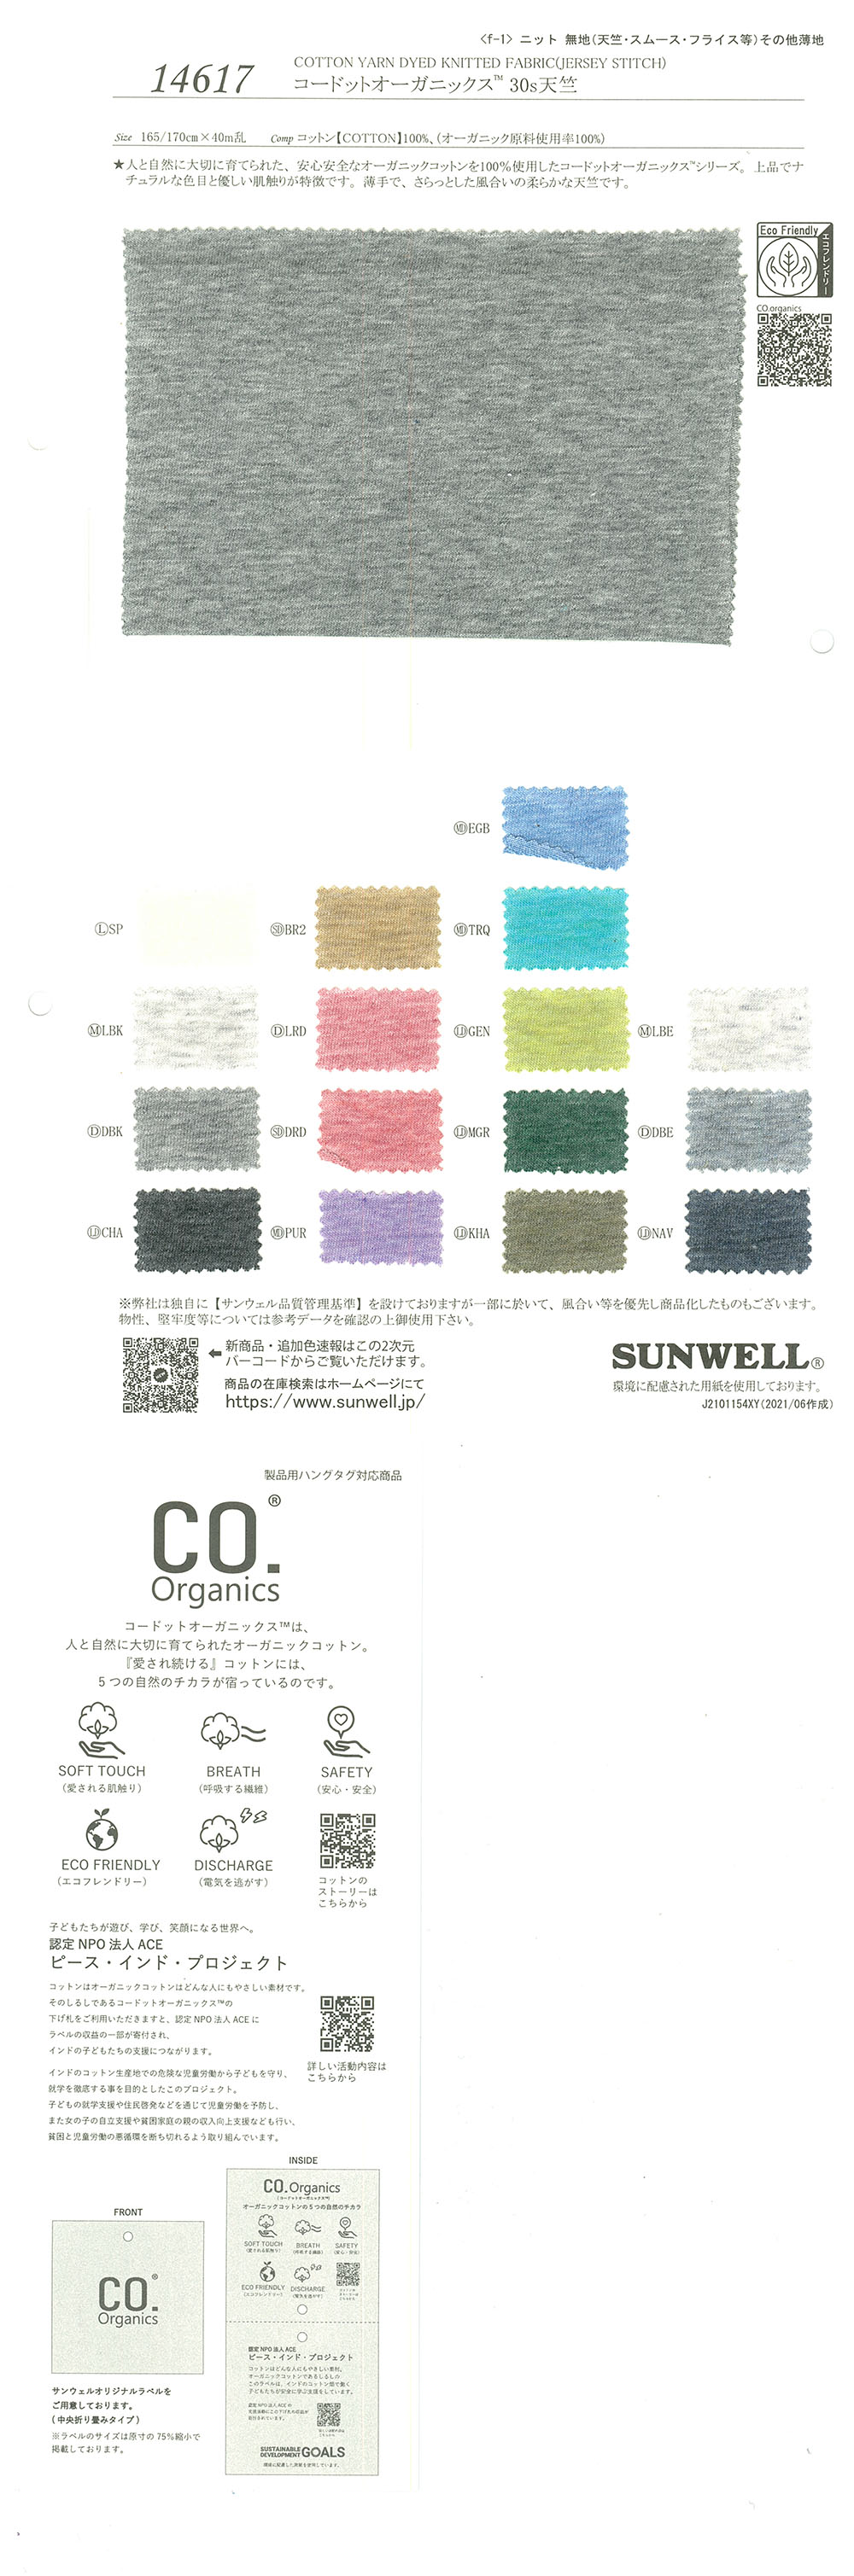 14617 Cordot Organics (R) 30 Einfädige Tianzhu-Baumwolle[Textilgewebe] SUNWELL